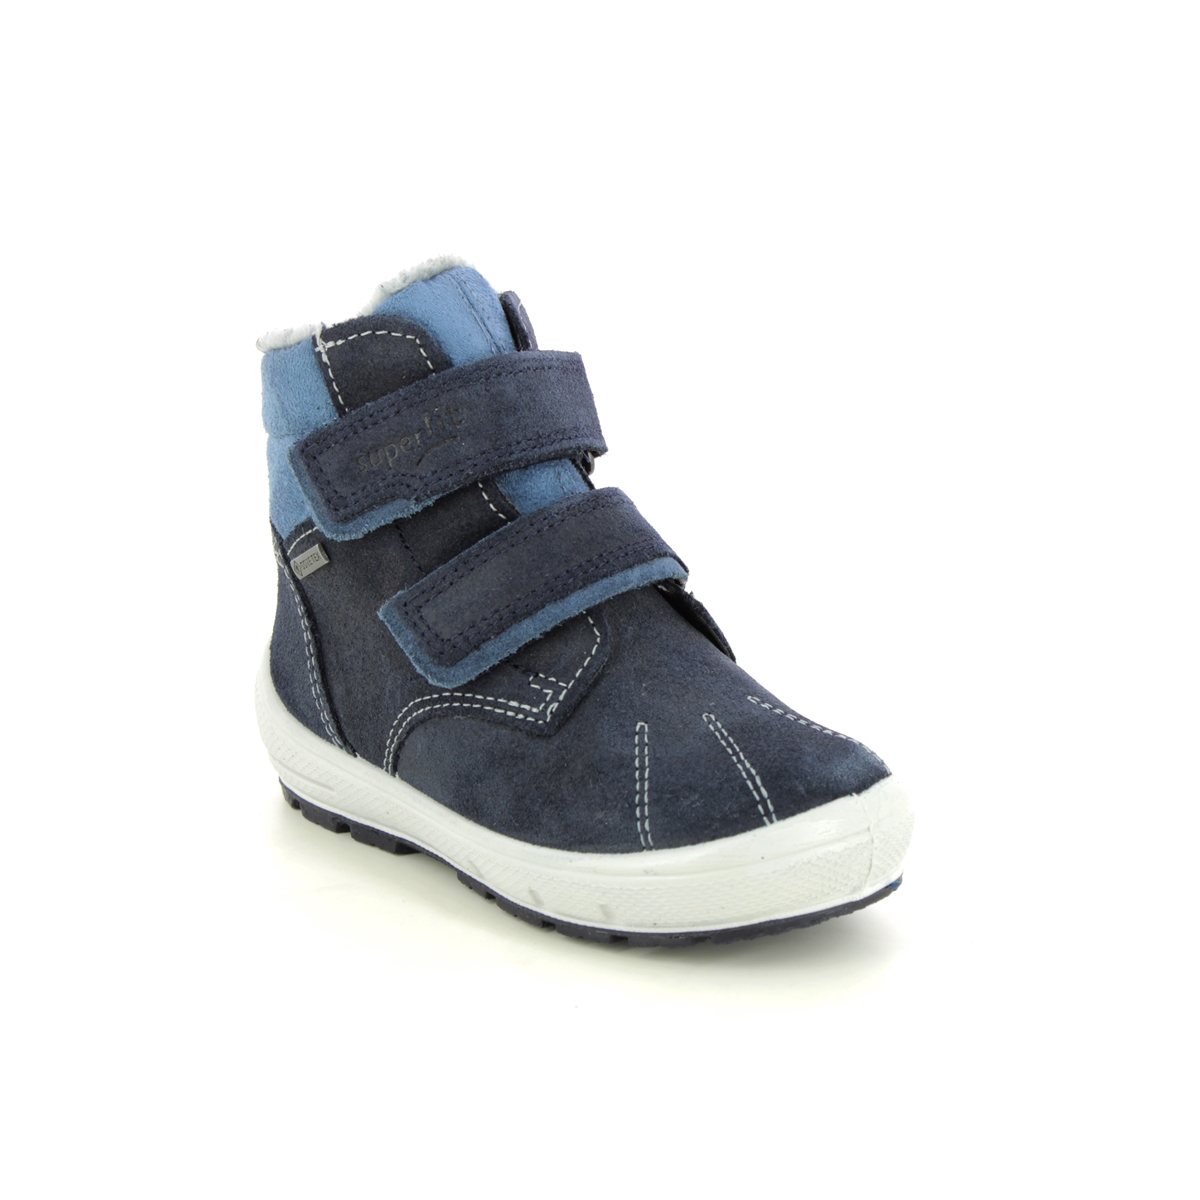 Superfit Groovy Gtx Navy Light Blue Kids Toddler Boys Boots 1006317-8000 In Size 27 In Plain Navy Light Blue